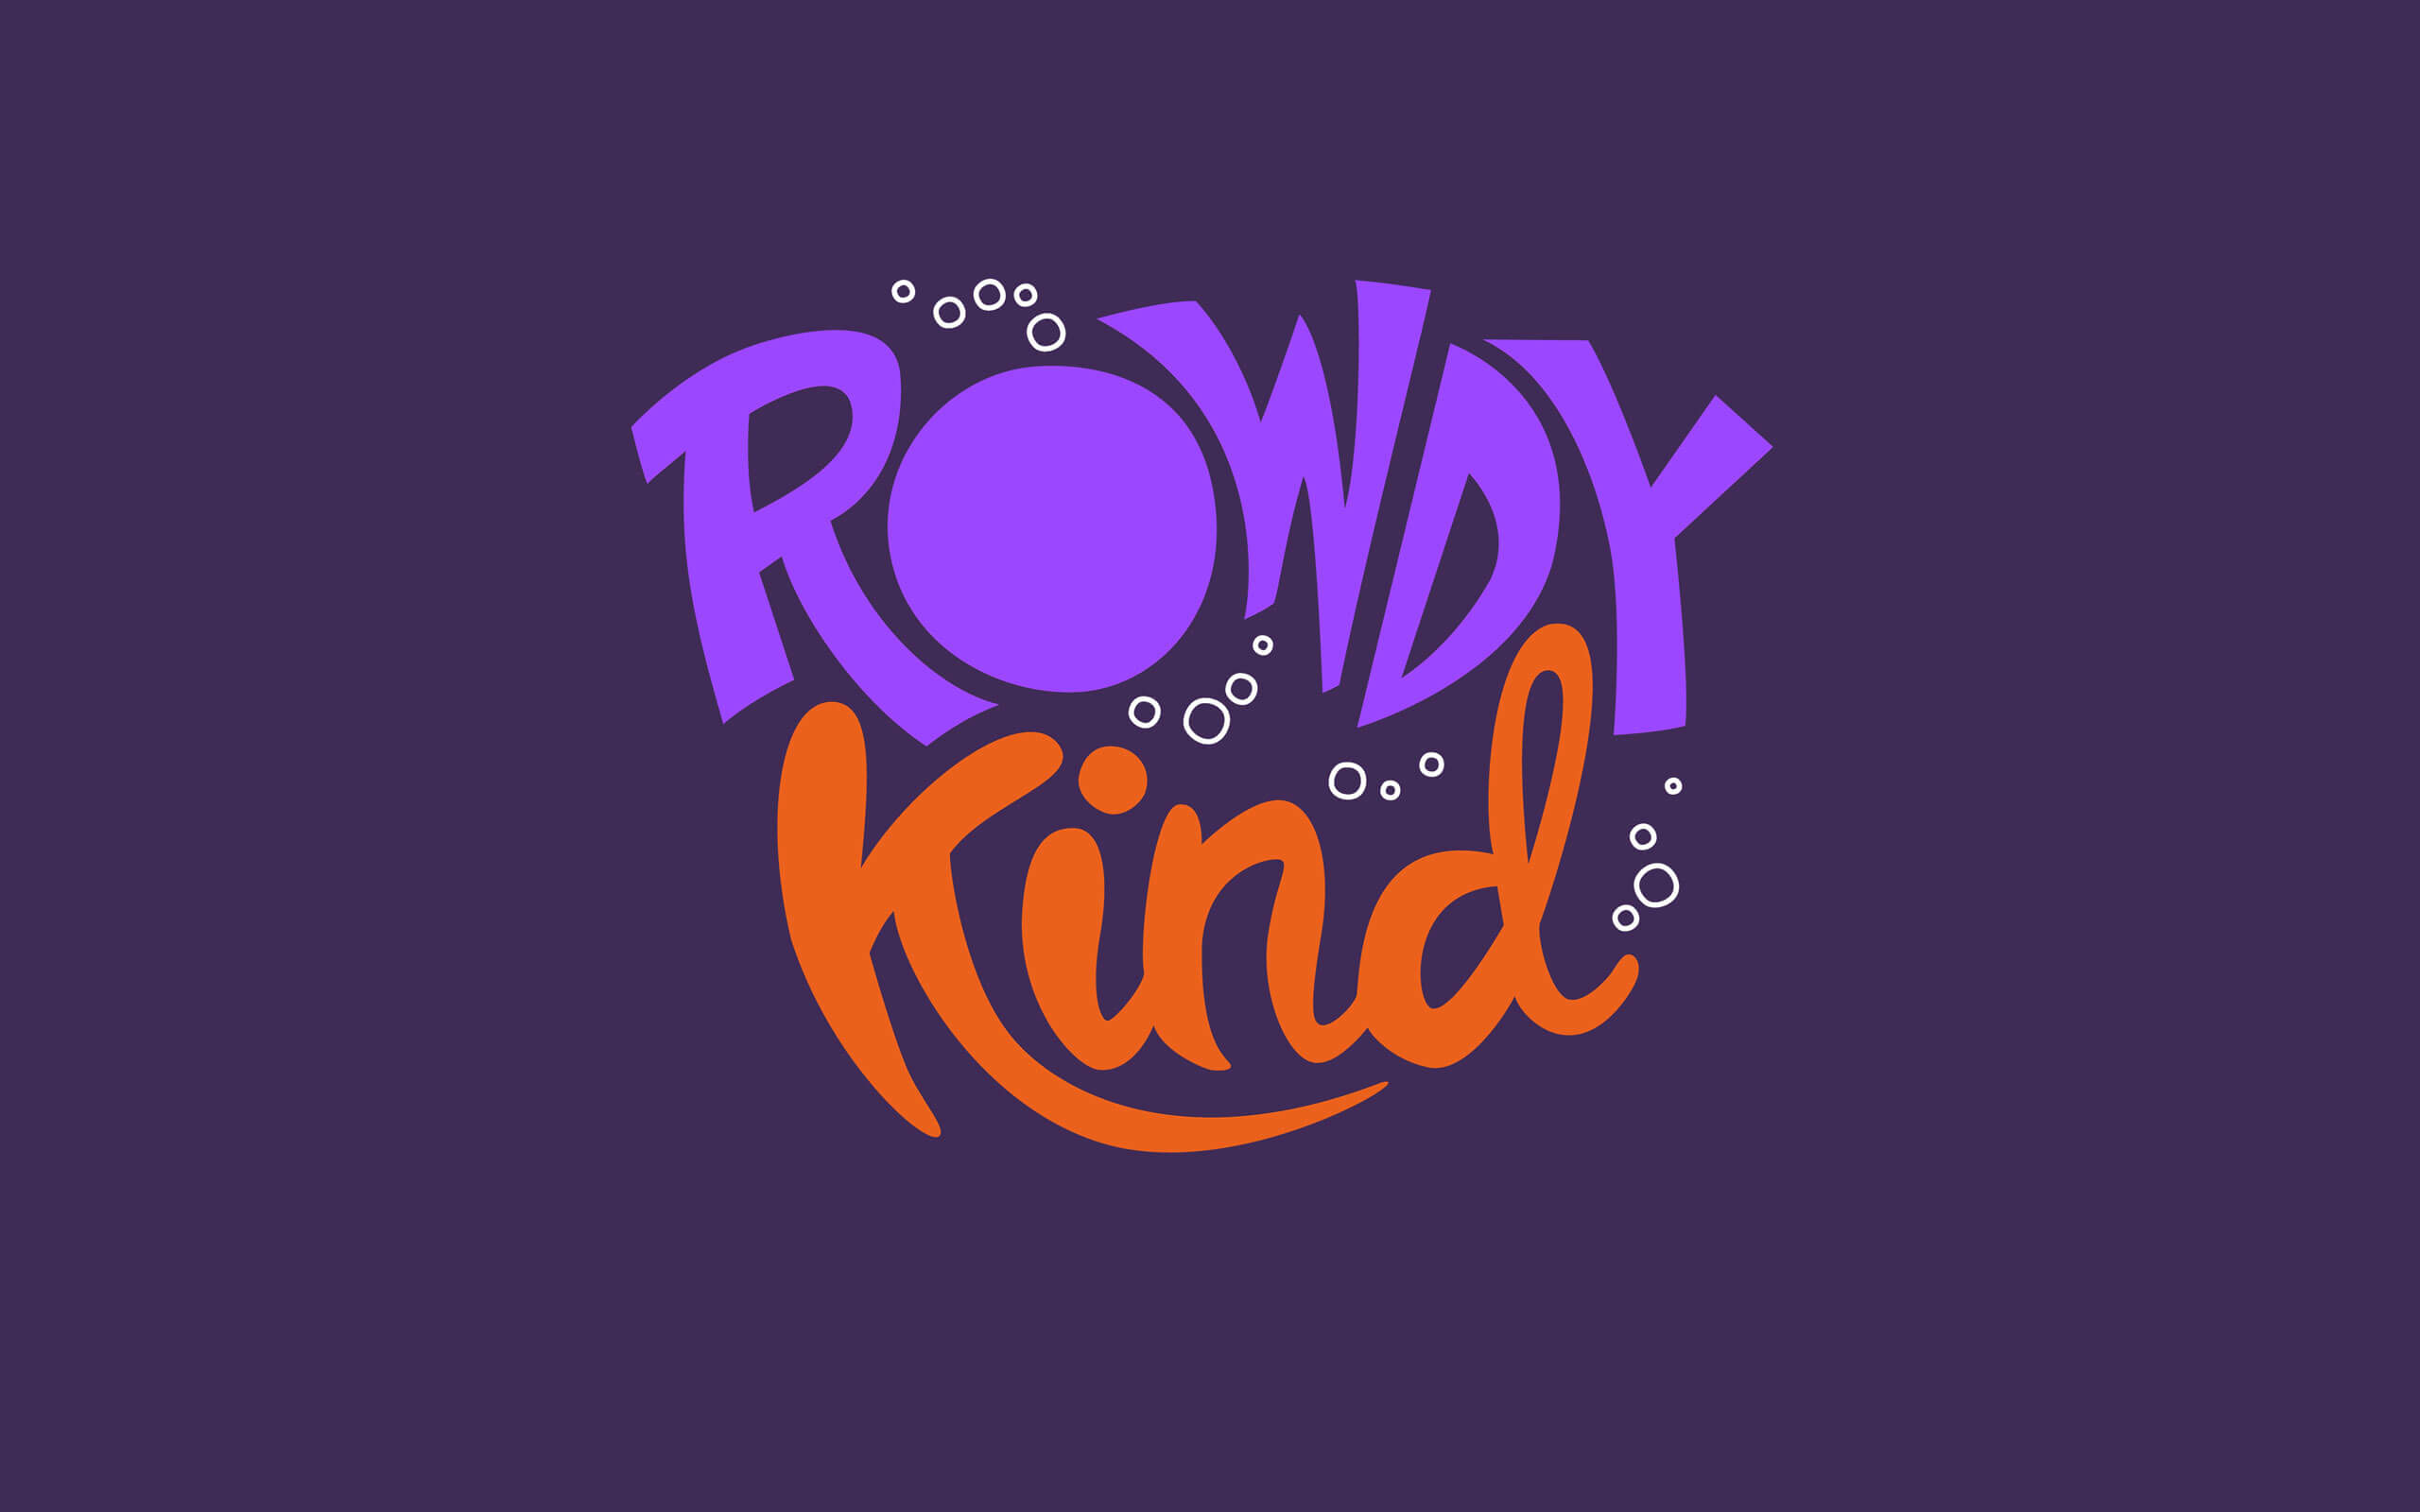 Taller Design Agency Rowdy Kind logo